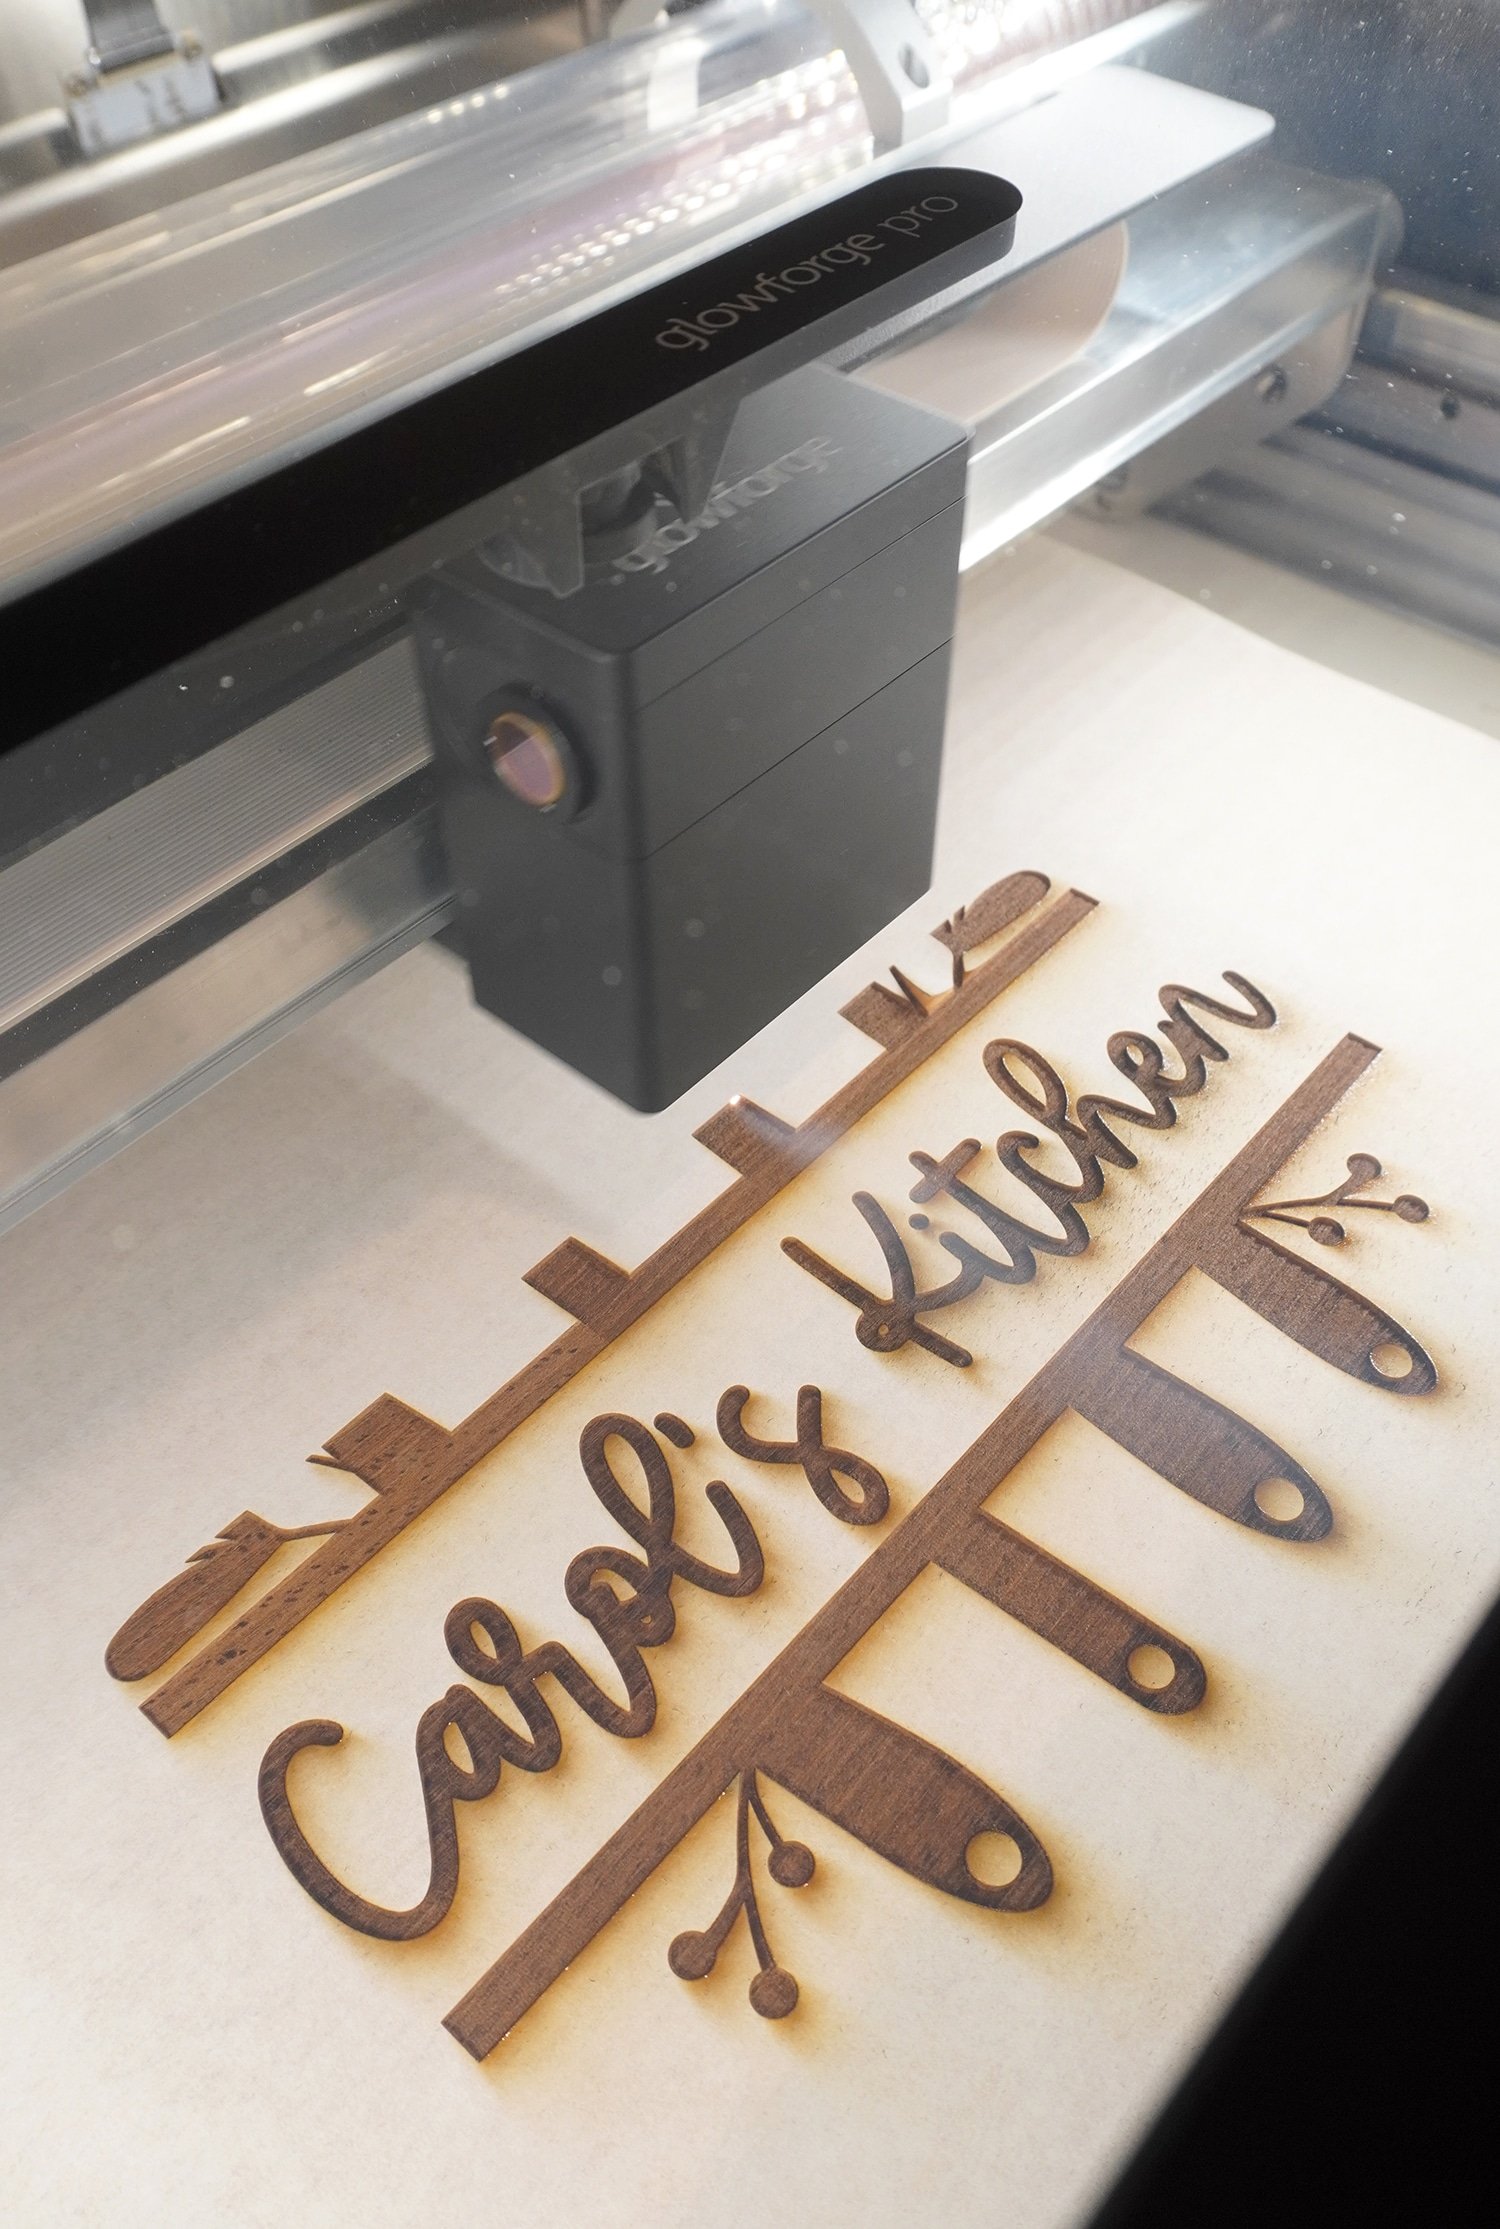 Glowforge Pro Engraving a Cutting Board with "Carol's Kitchen" design